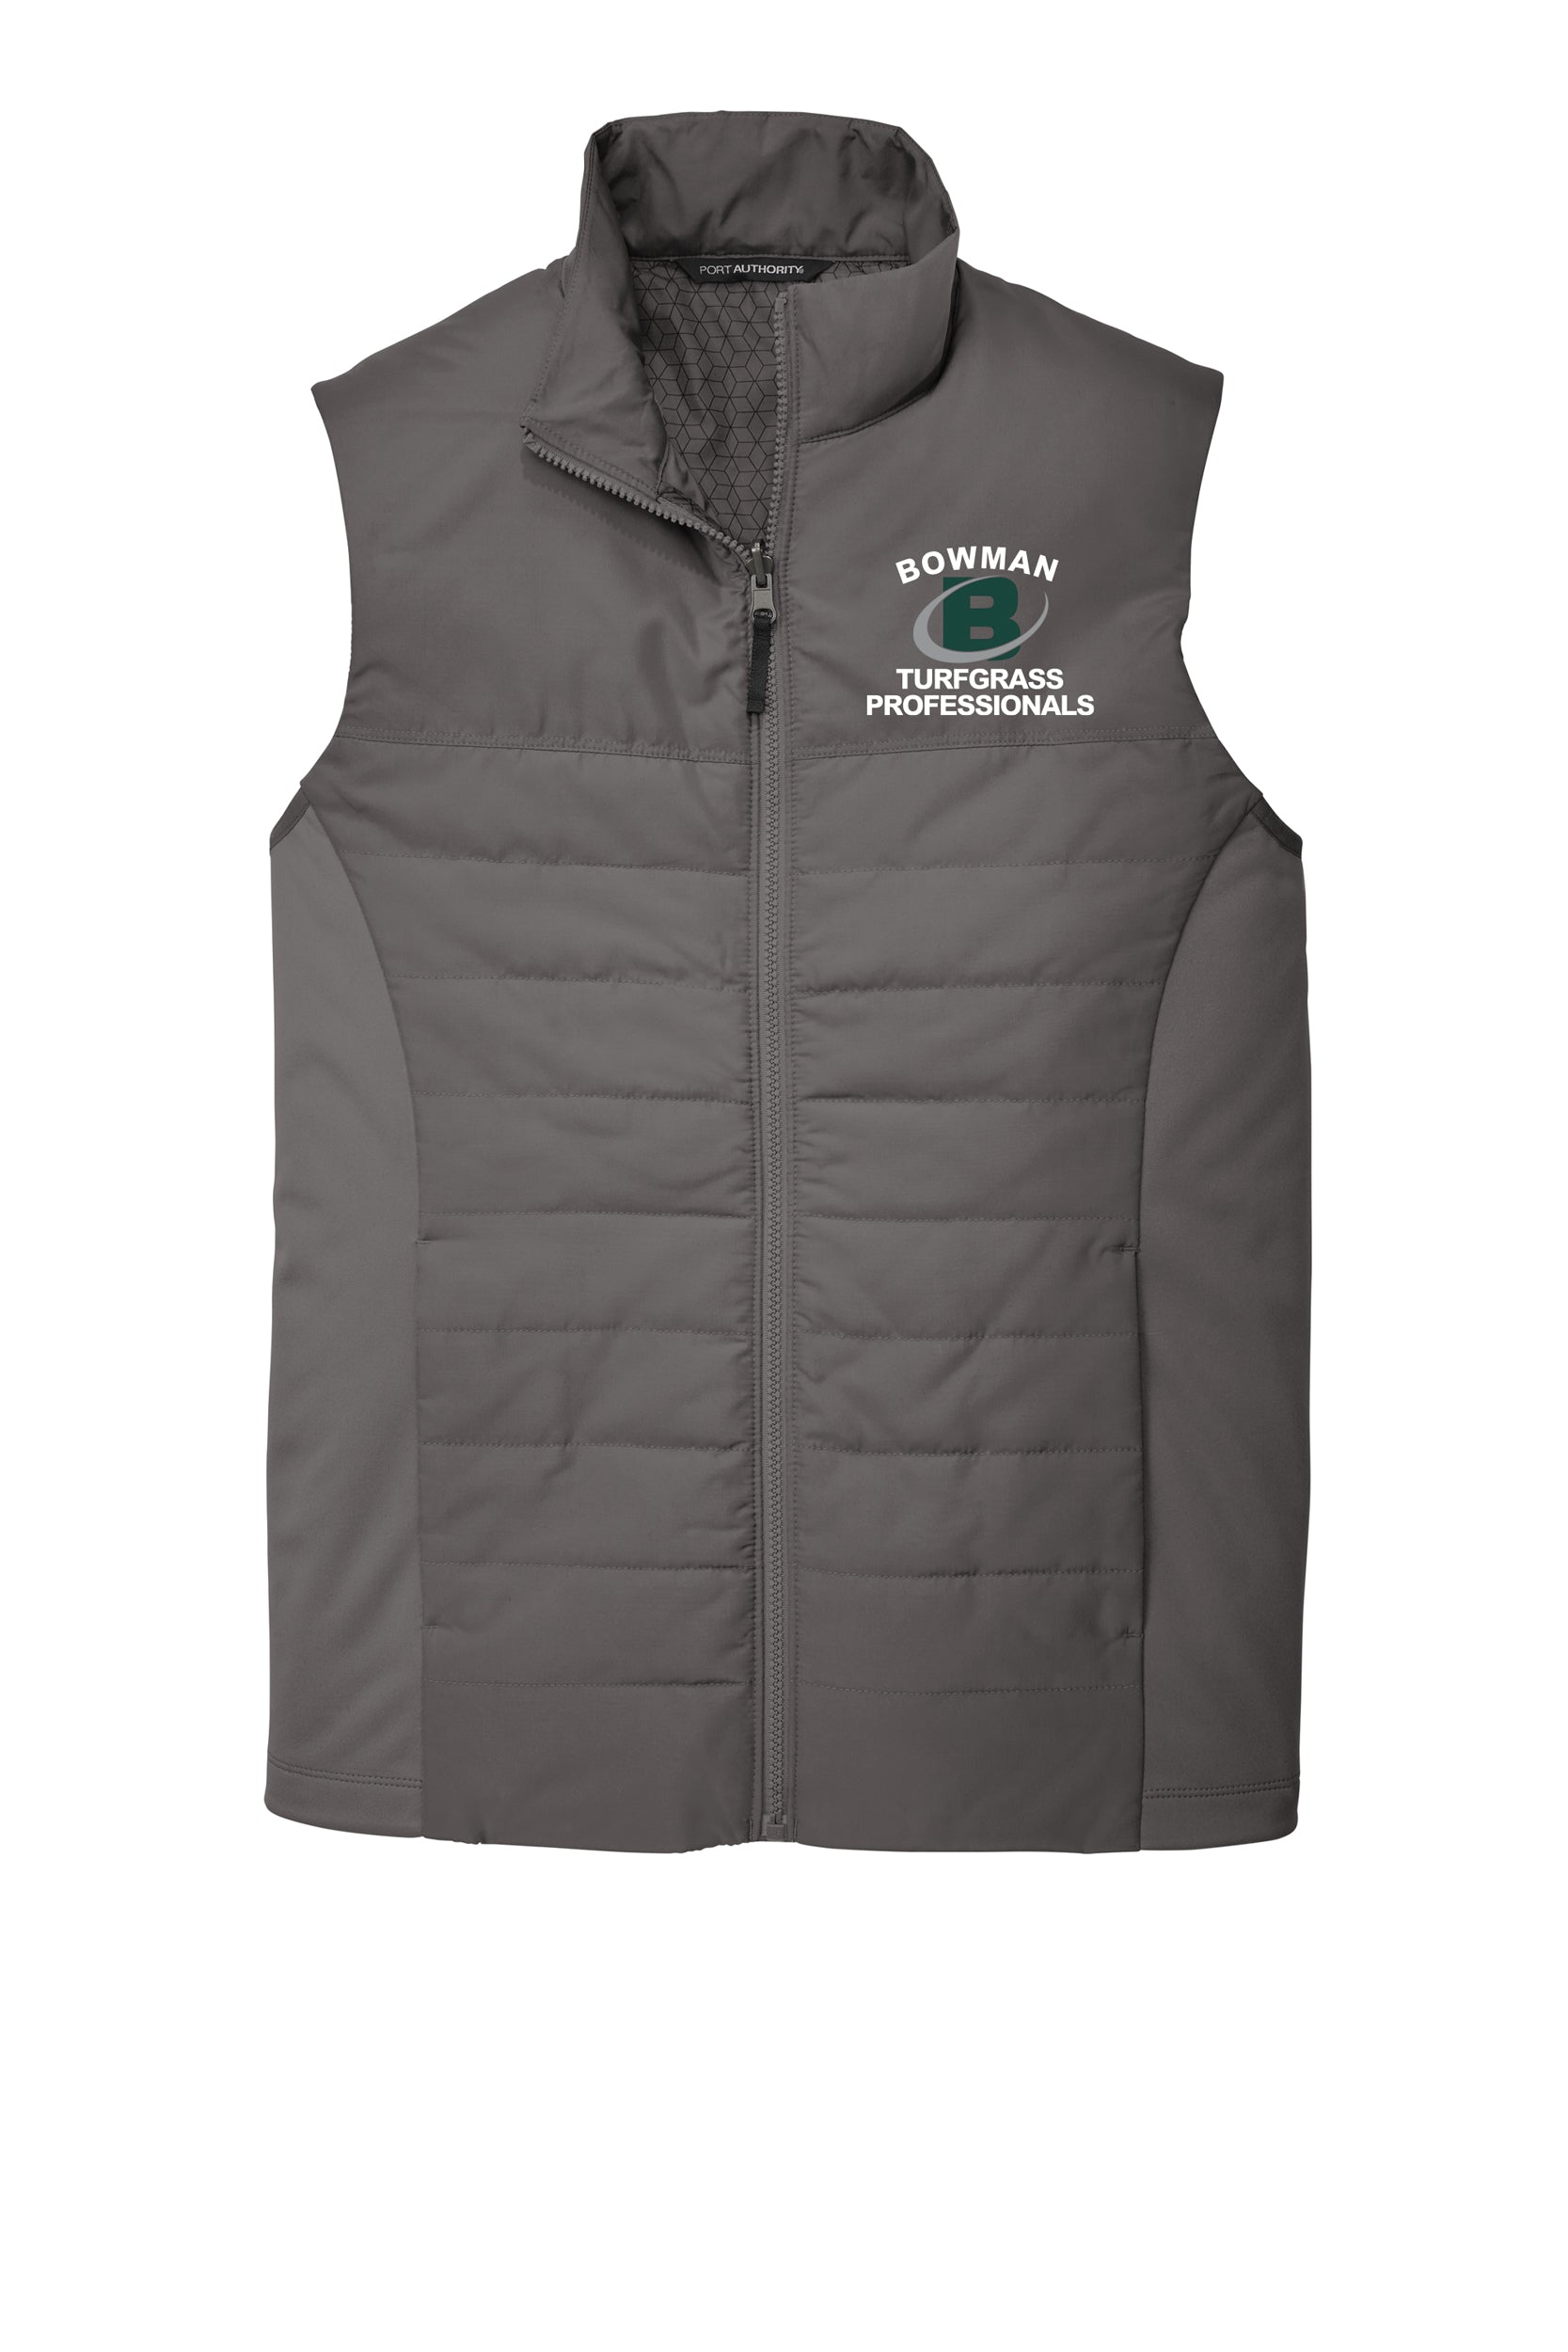 Bowman Turfgrass Professionals - Puffy Vest